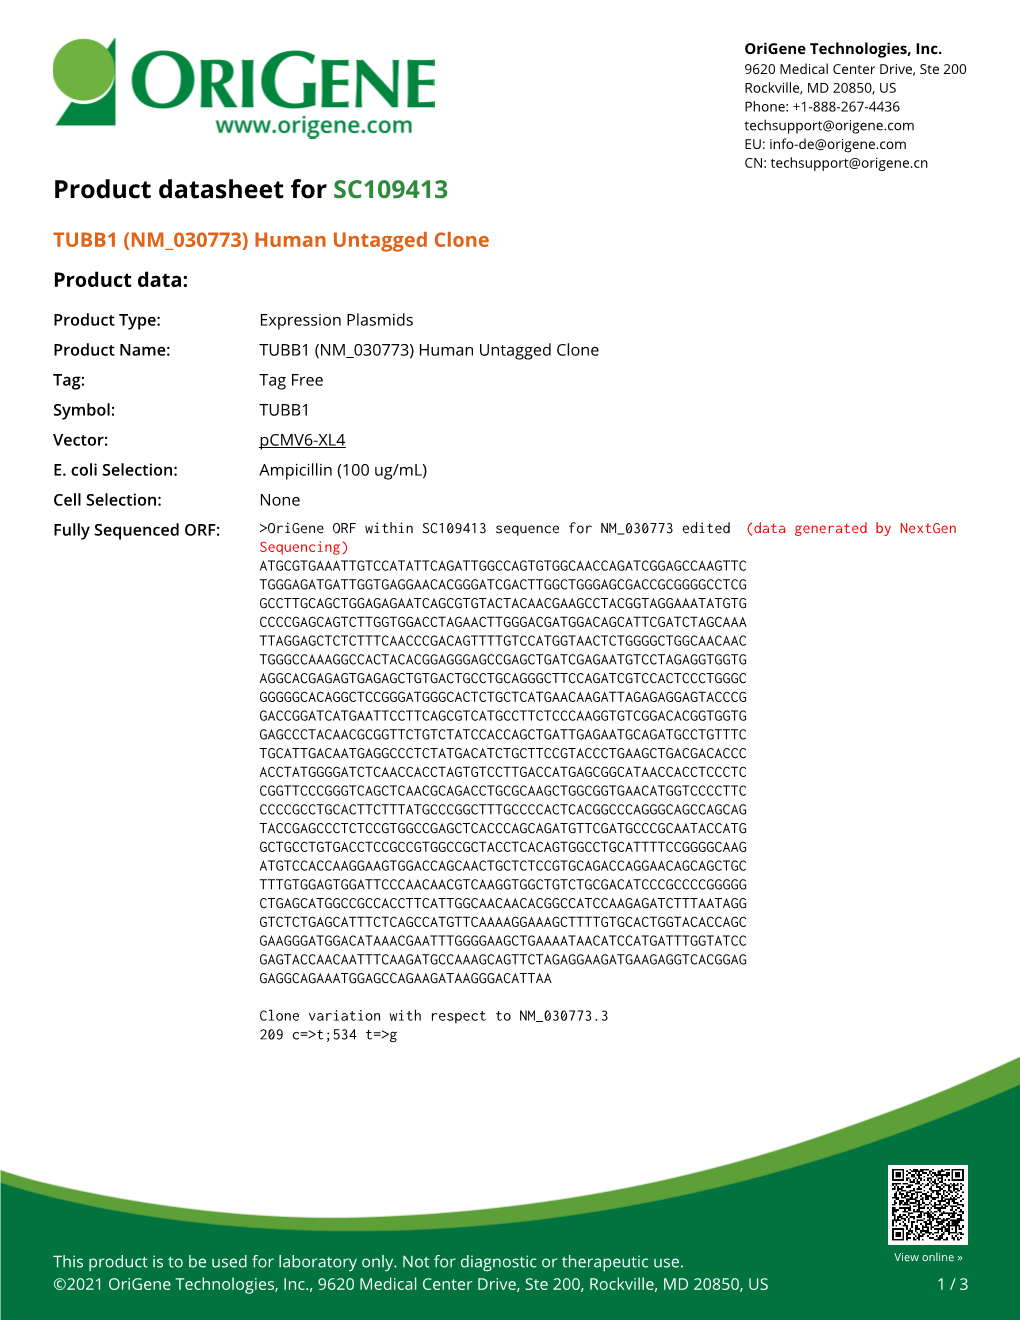 TUBB1 (NM 030773) Human Untagged Clone Product Data